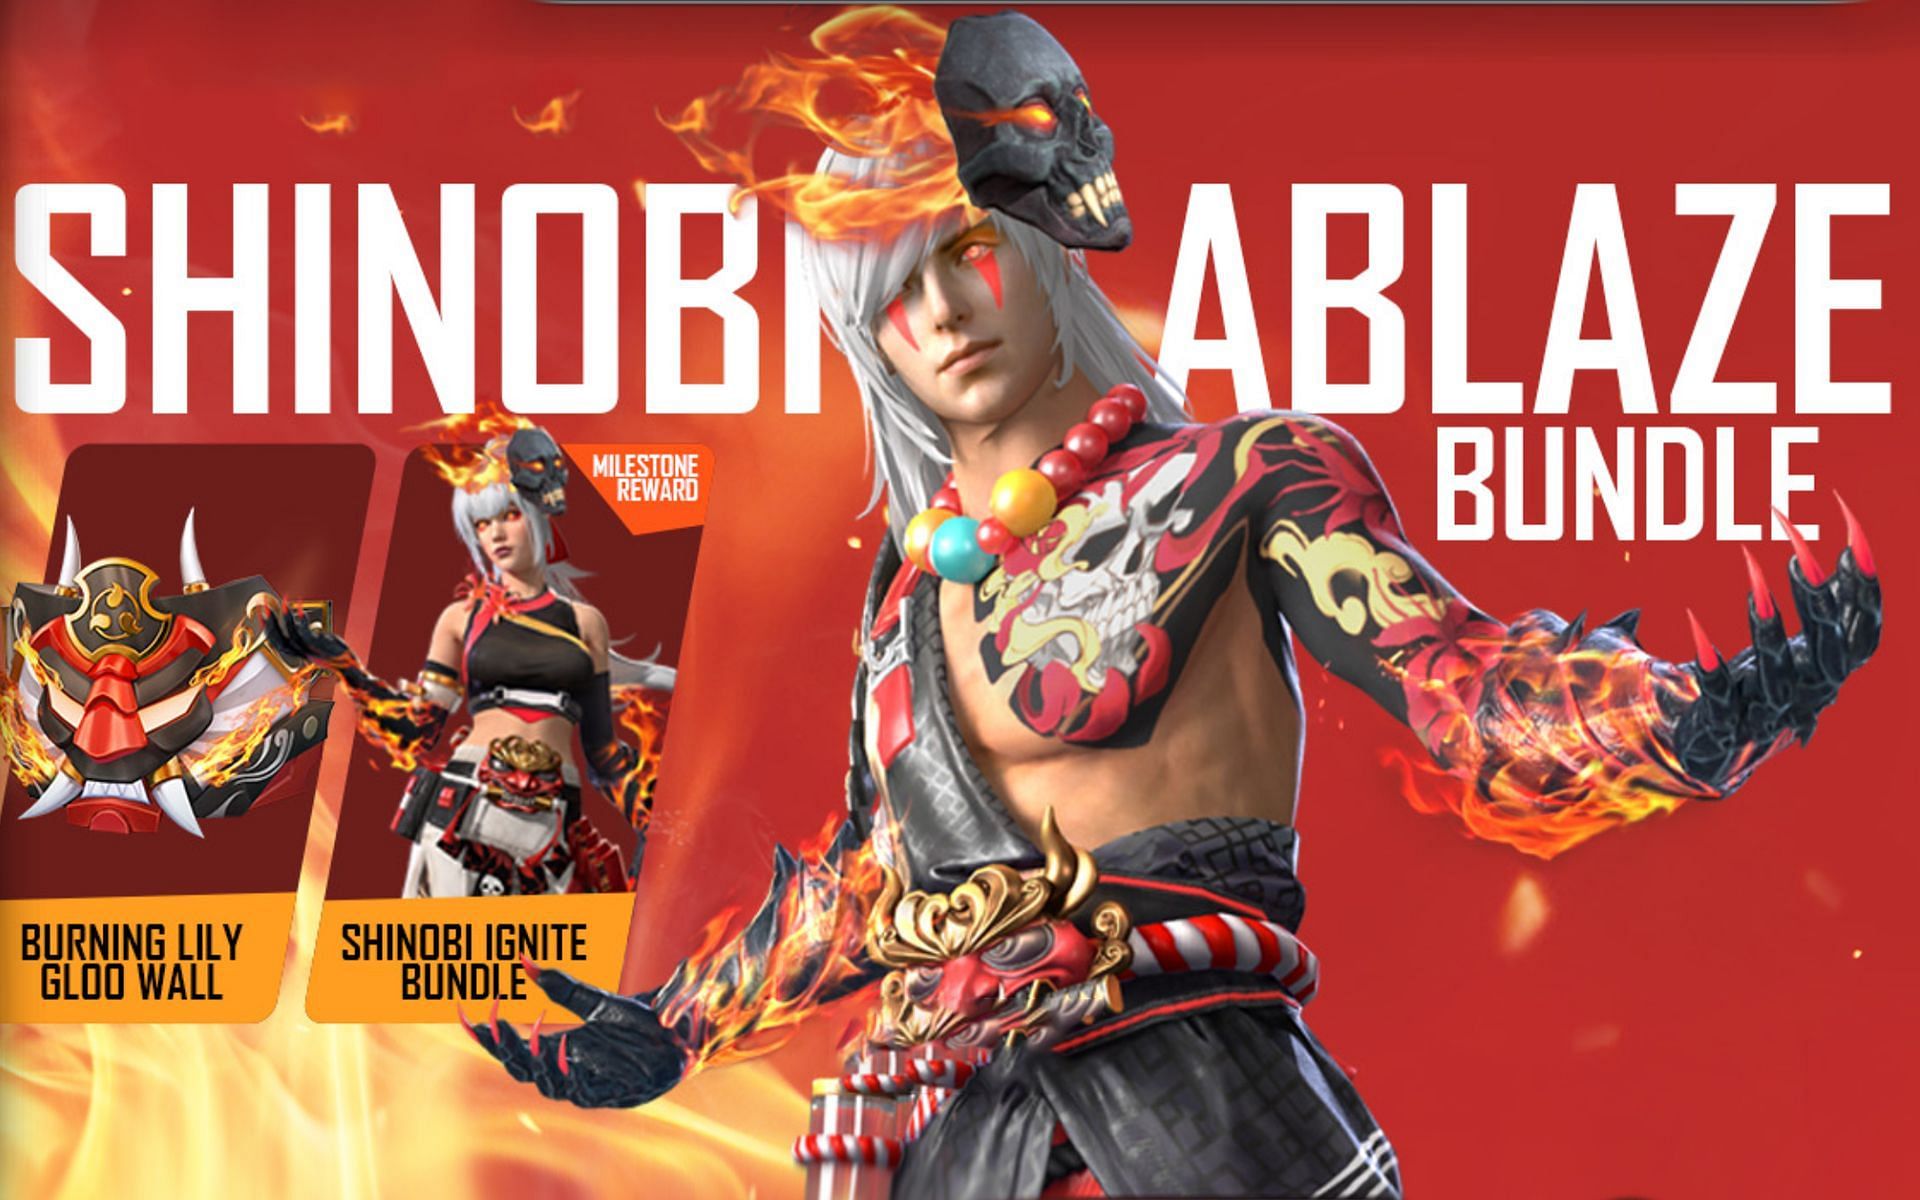 Shinobi Ablaze bundle is one of the rewards in the new event (Image via Garena)